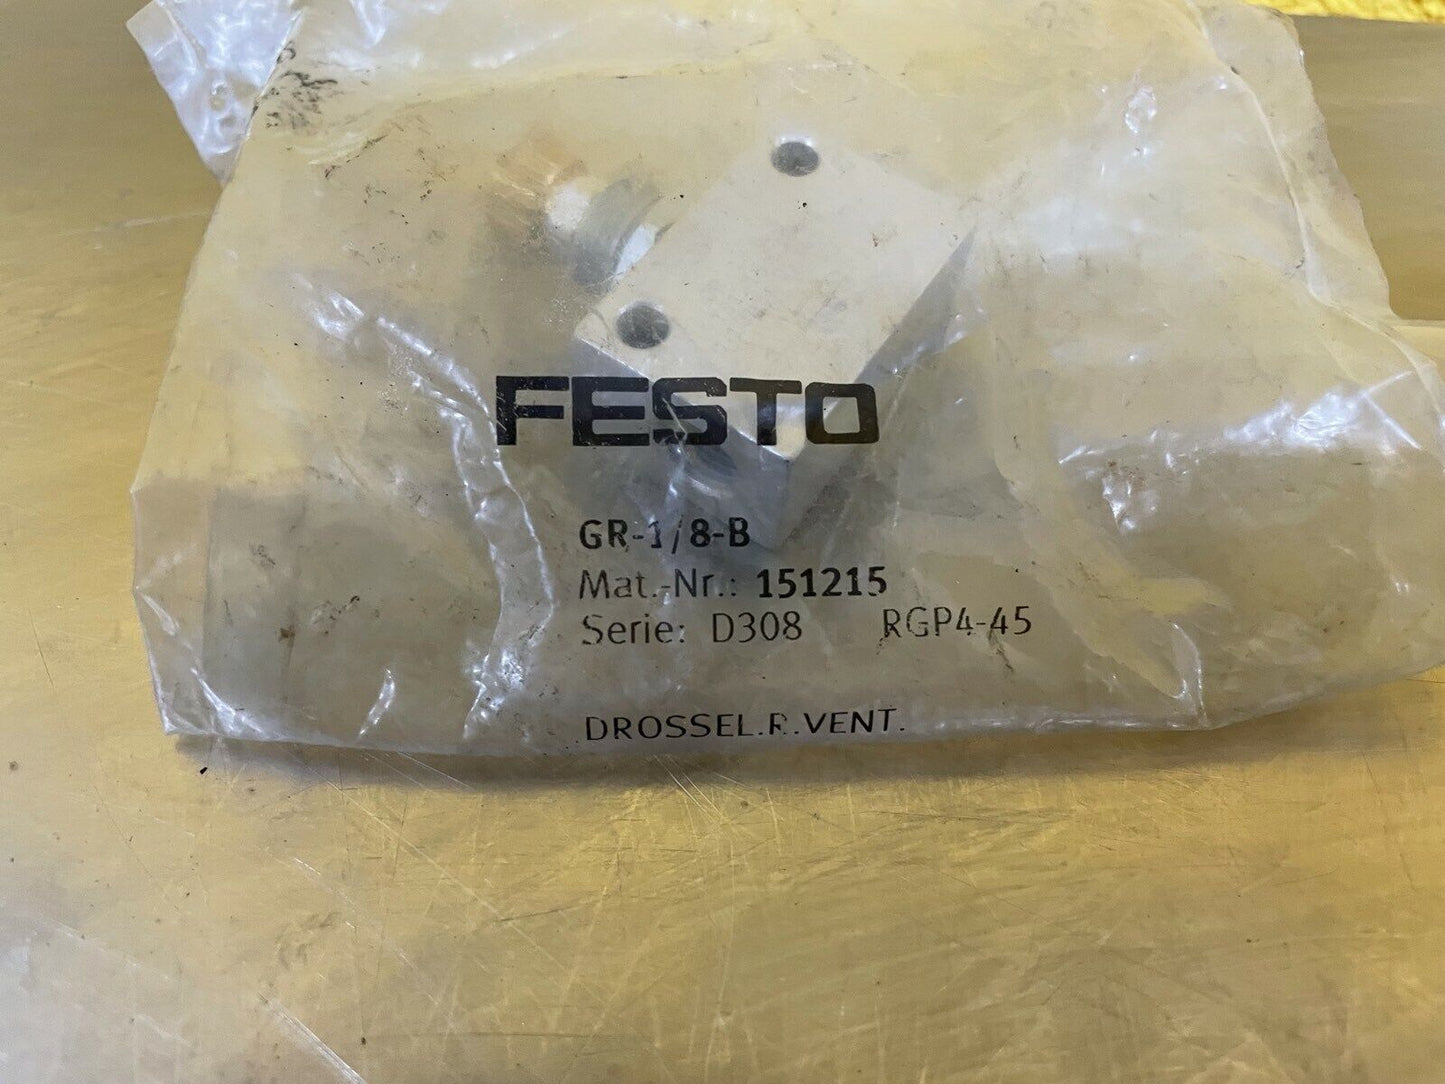 Festo GR-1/8-B 151215 1-Way Flow Control Valve